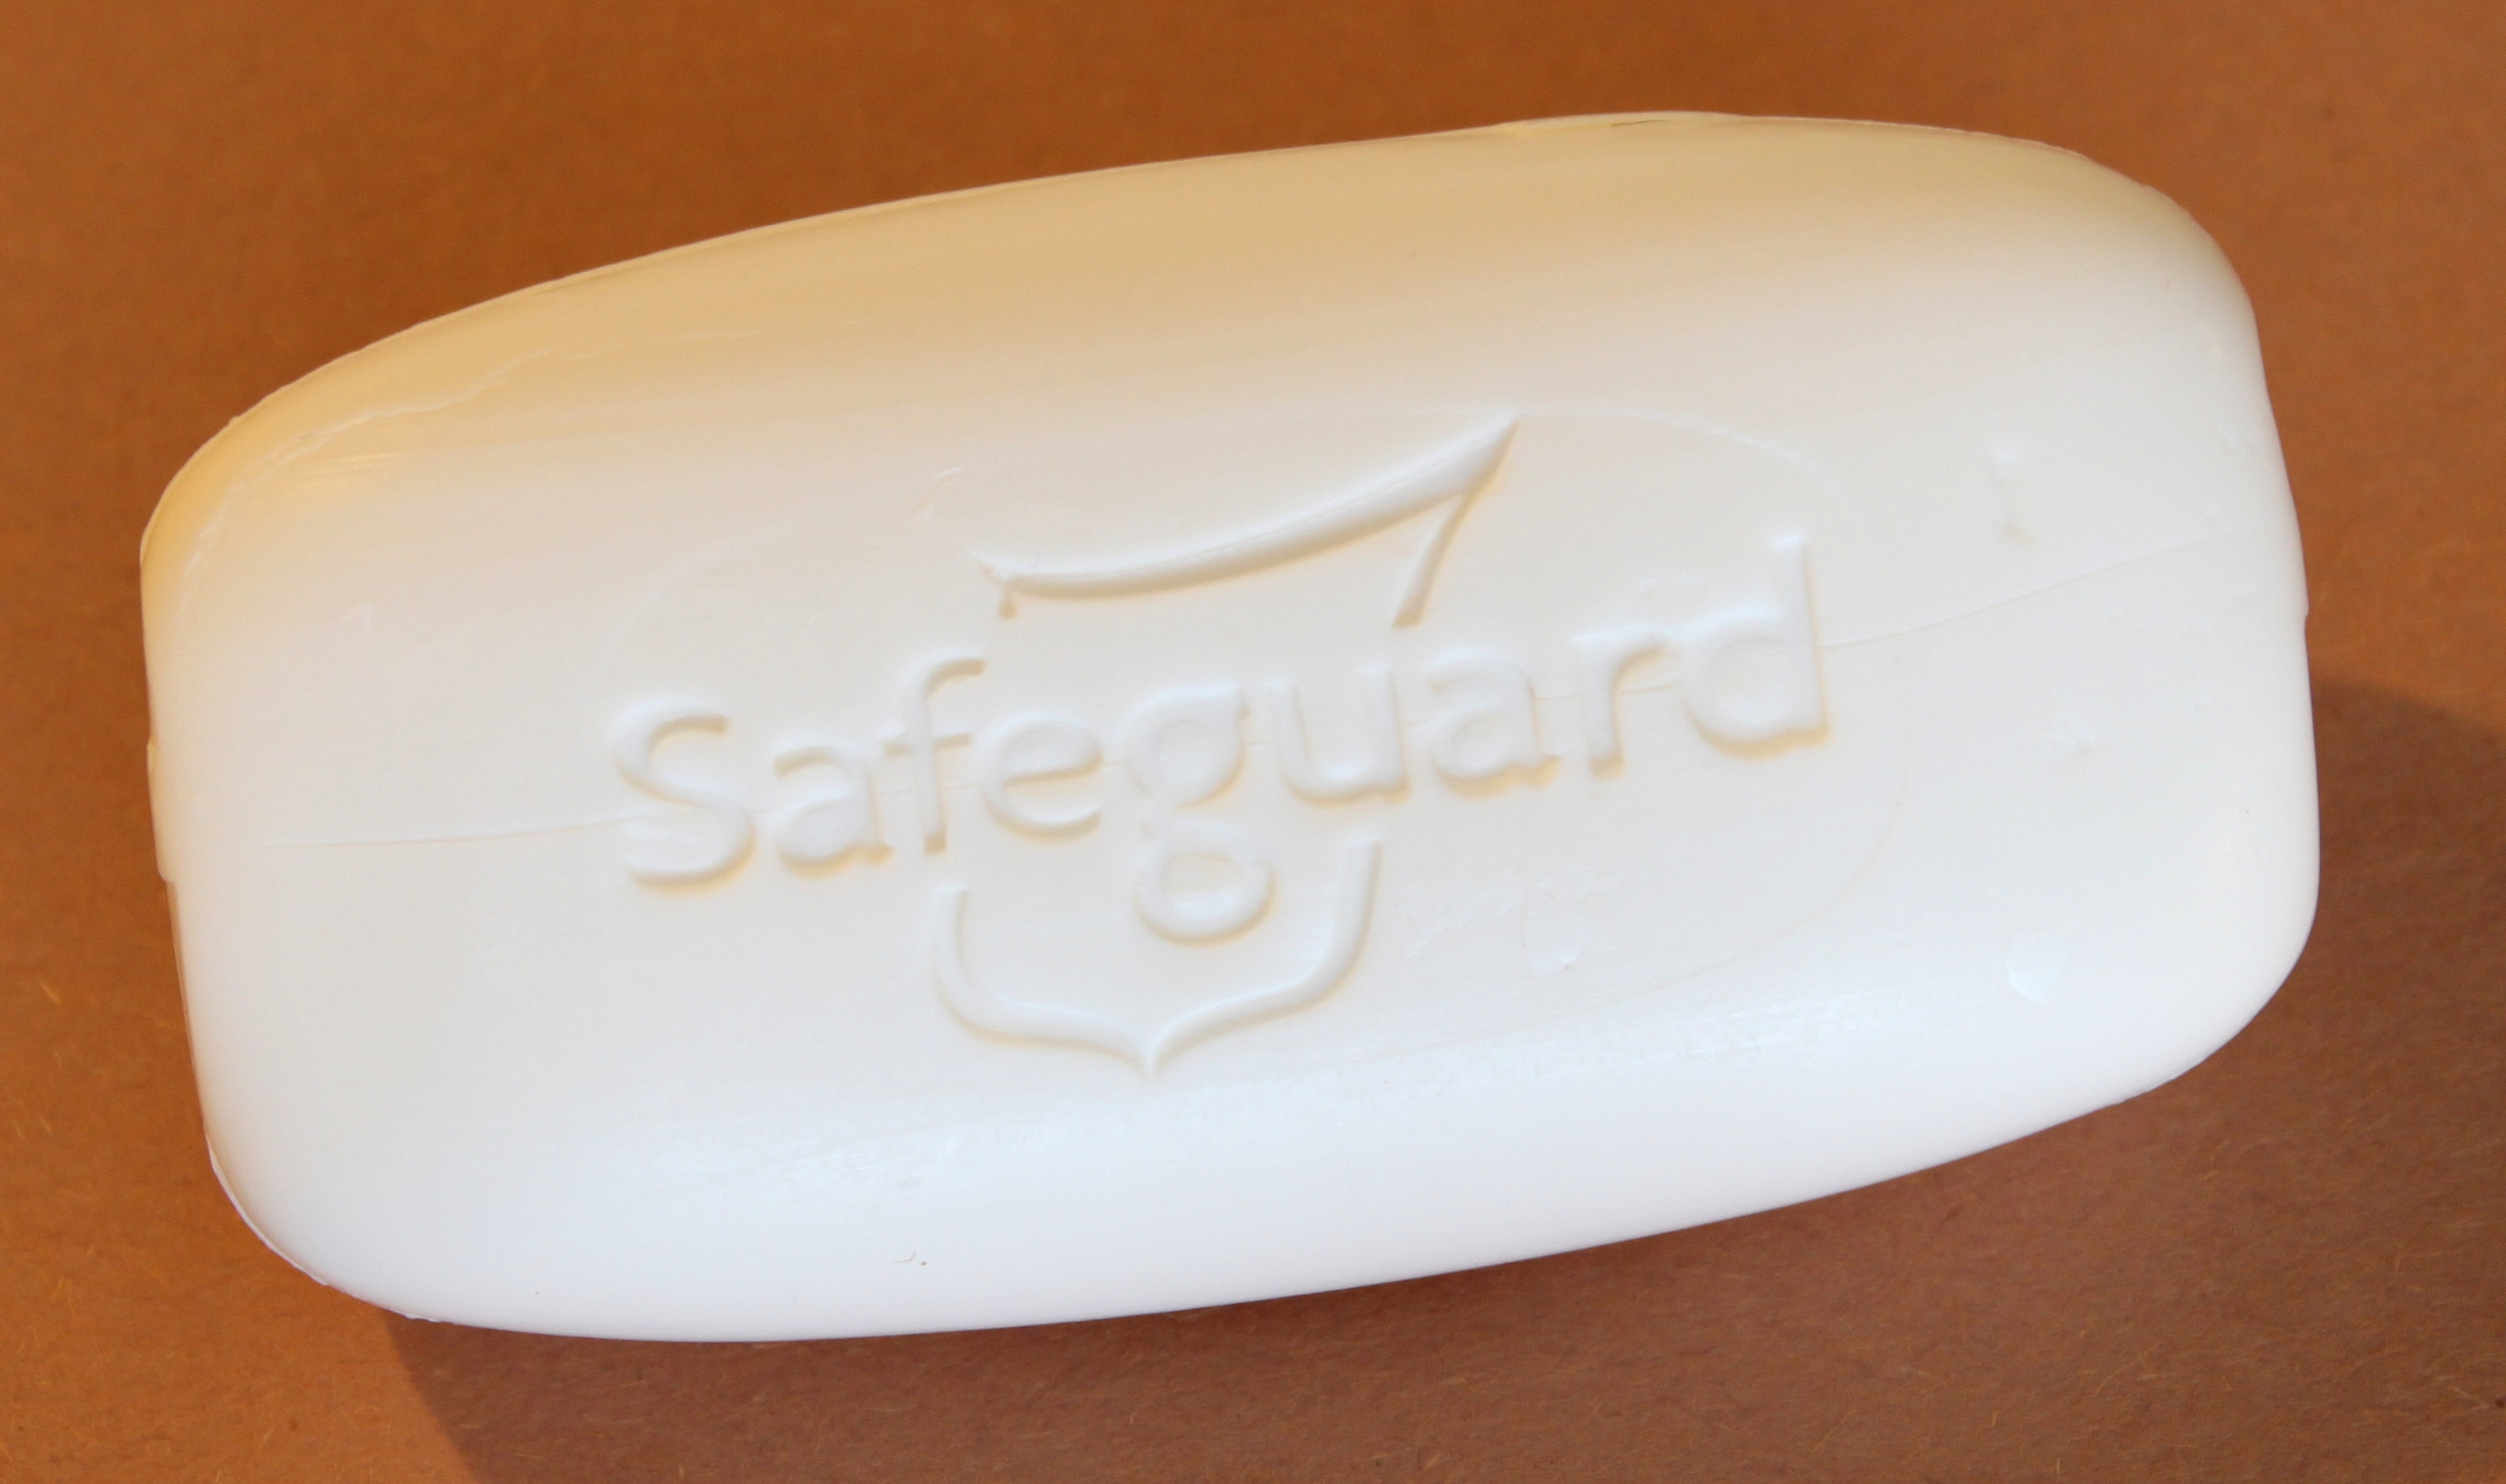 Bar_of_Safeguard_deodorant_soap.JPG